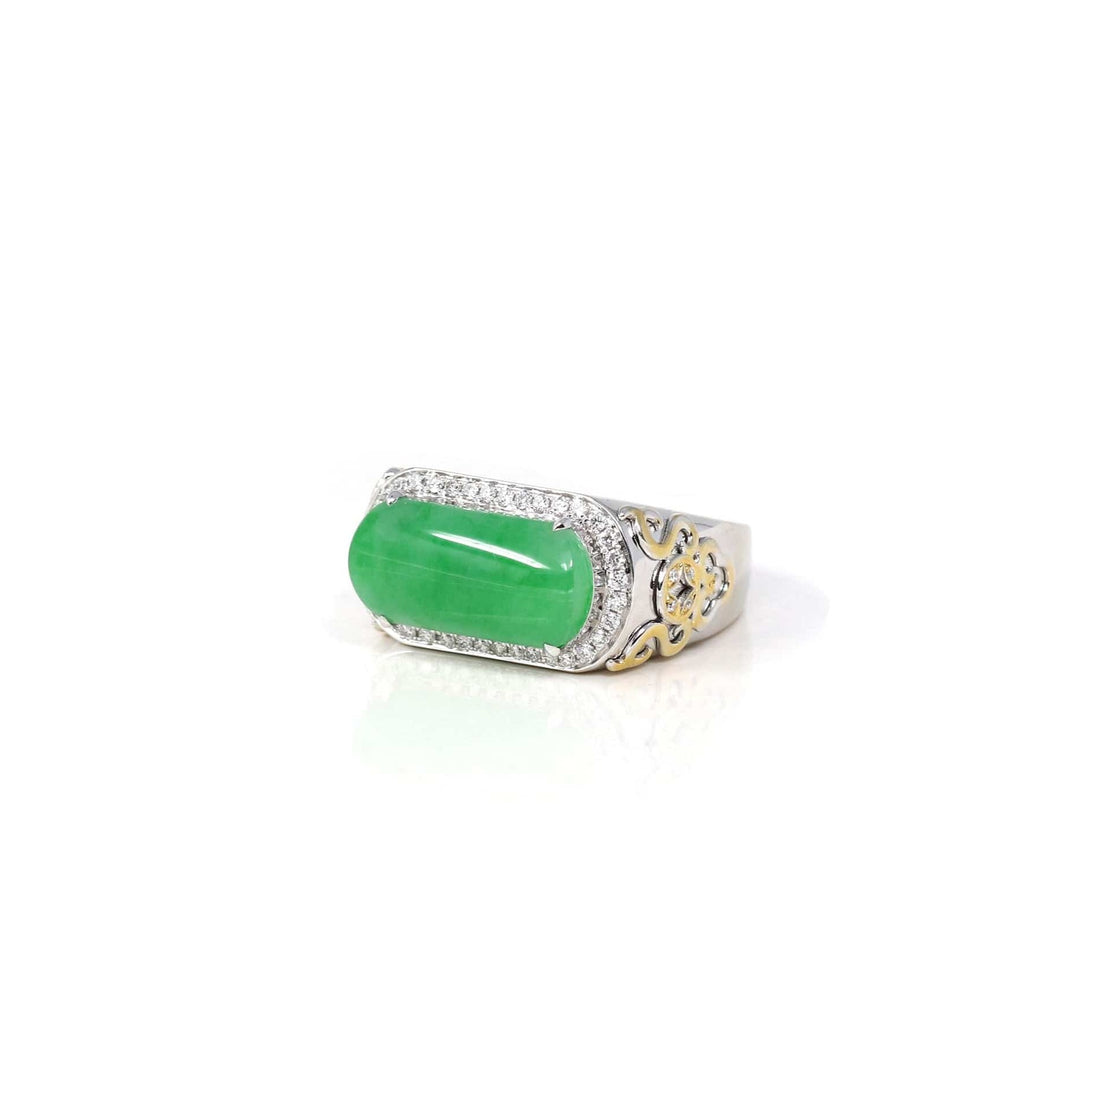 Baikalla Jewelry Jadeite Engagement Ring Copy of Baikalla 18k White 2 Tone Gold Natural Imperial Green Jadeite Jade  Men's Ring With Diamonds